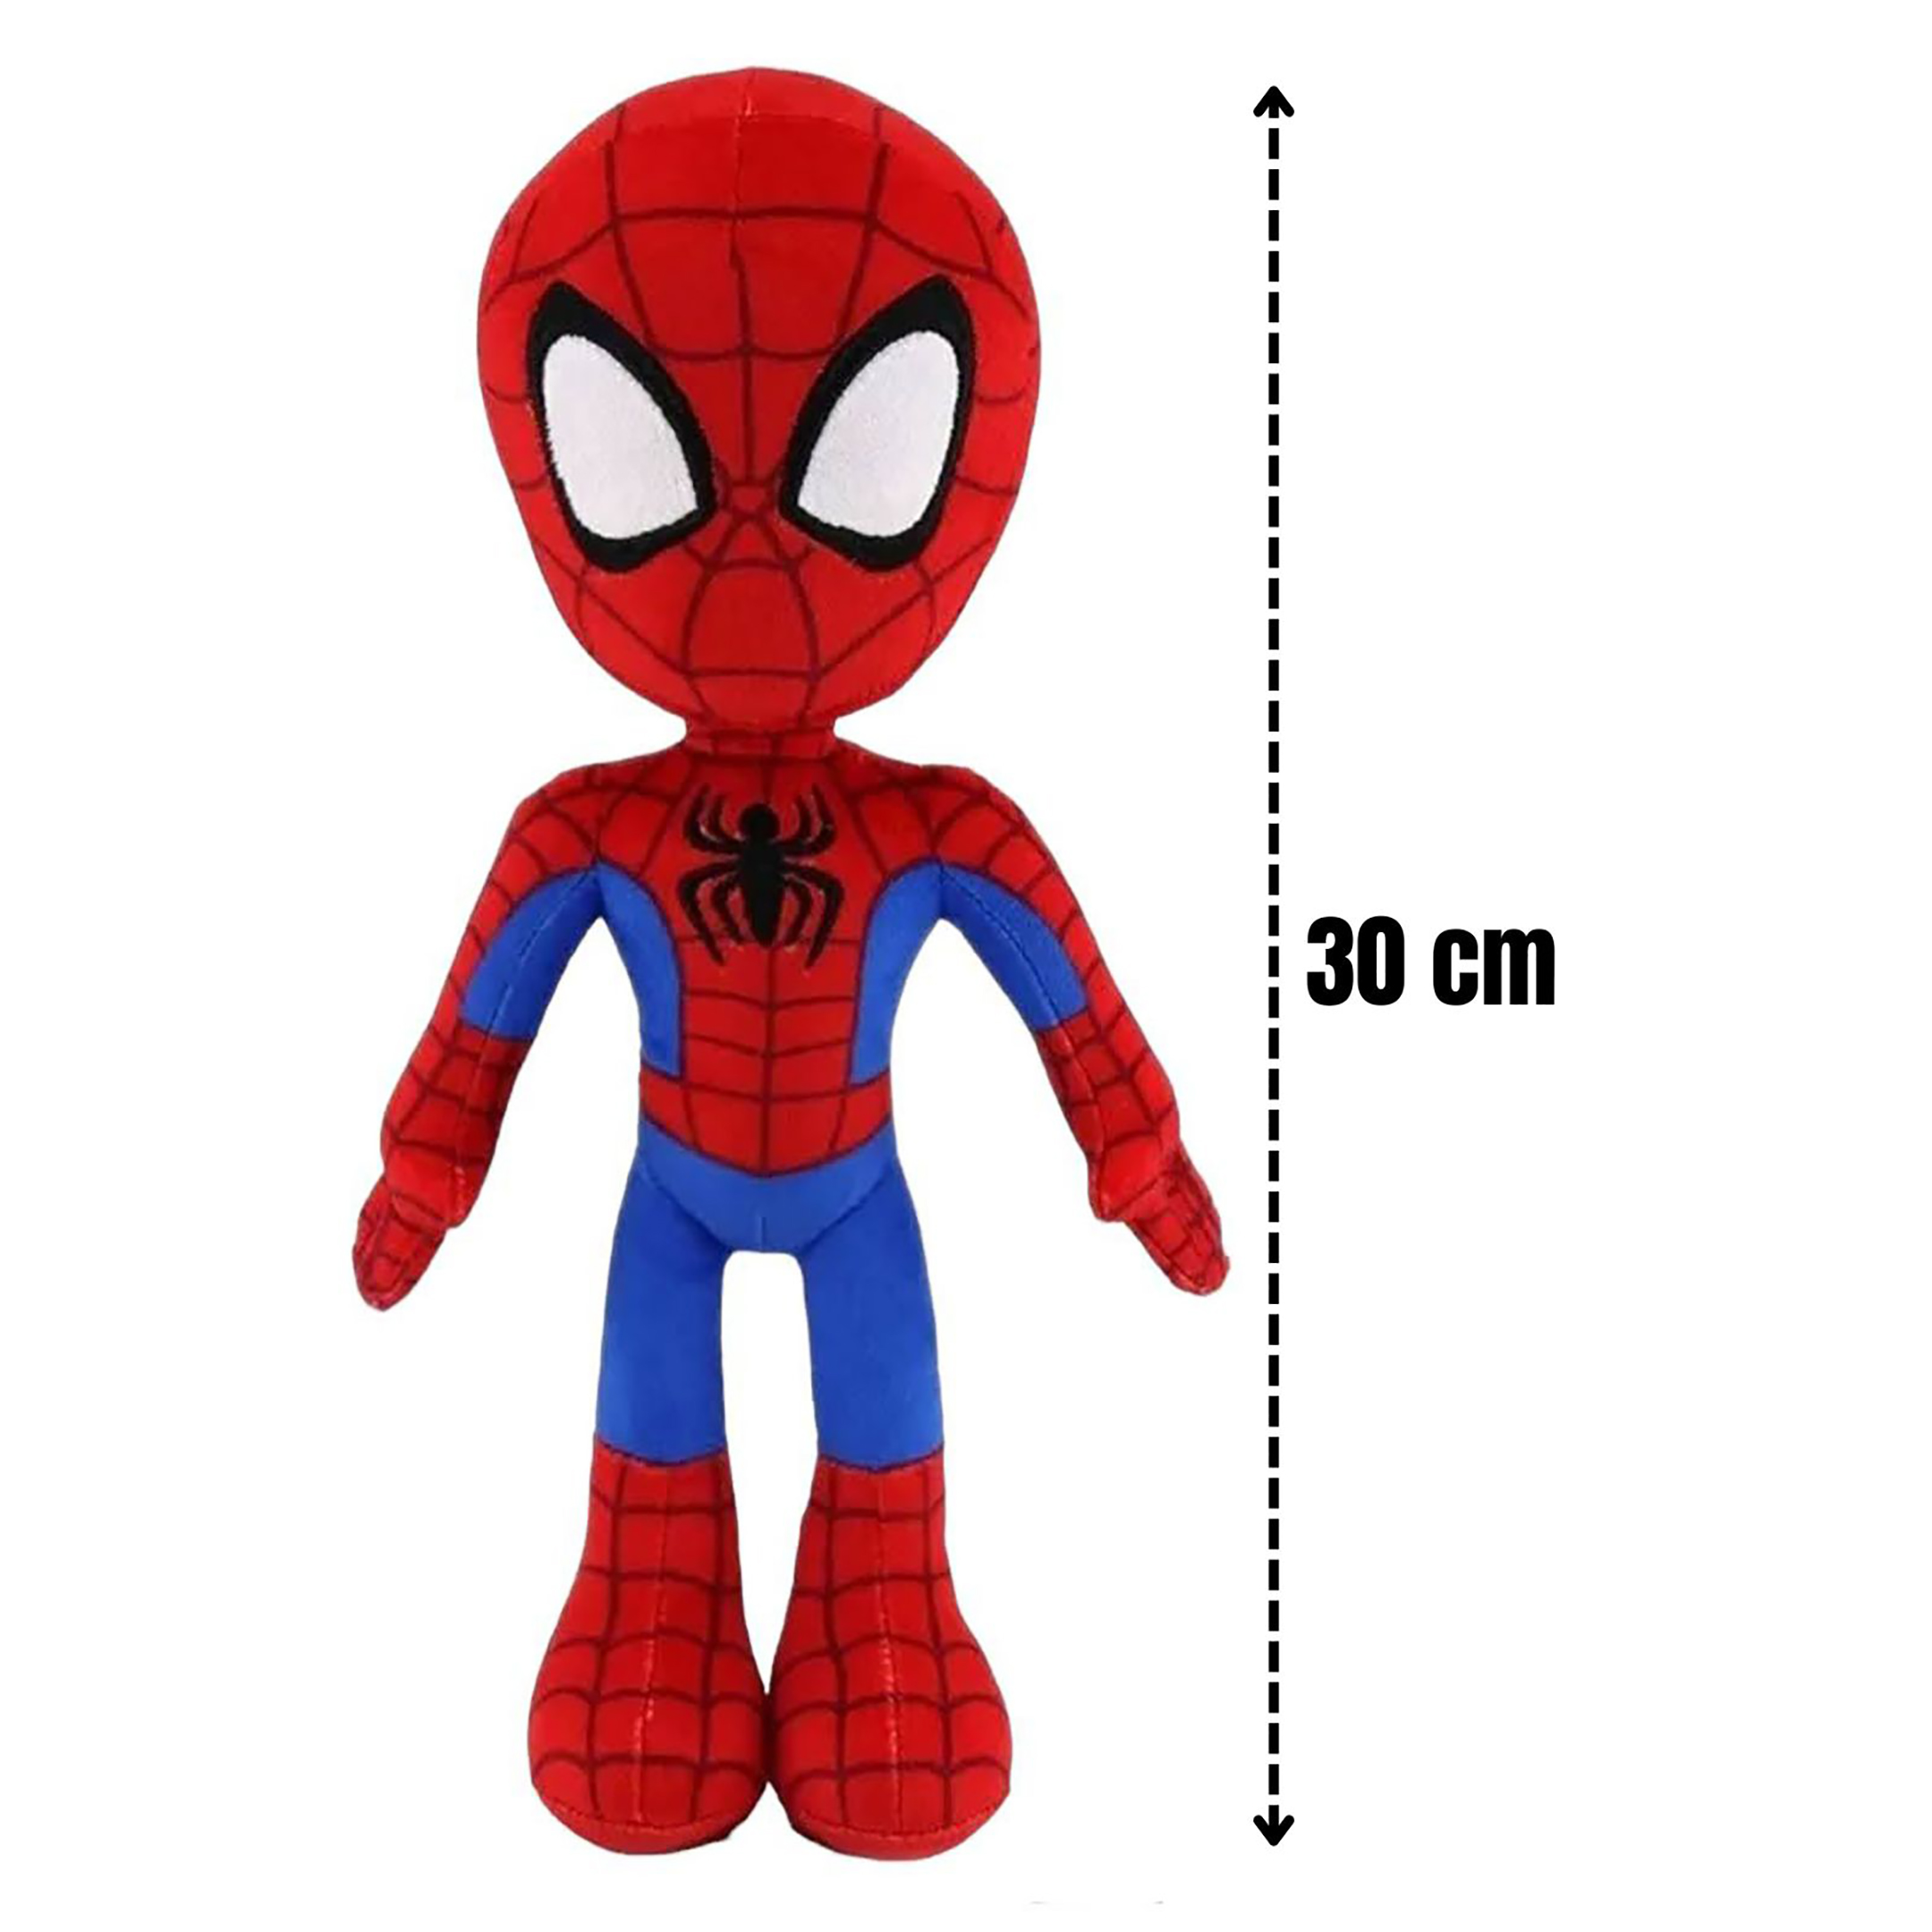 Peluche Spiderman Marvel Spiderman rojo azul 30 cm - Disney